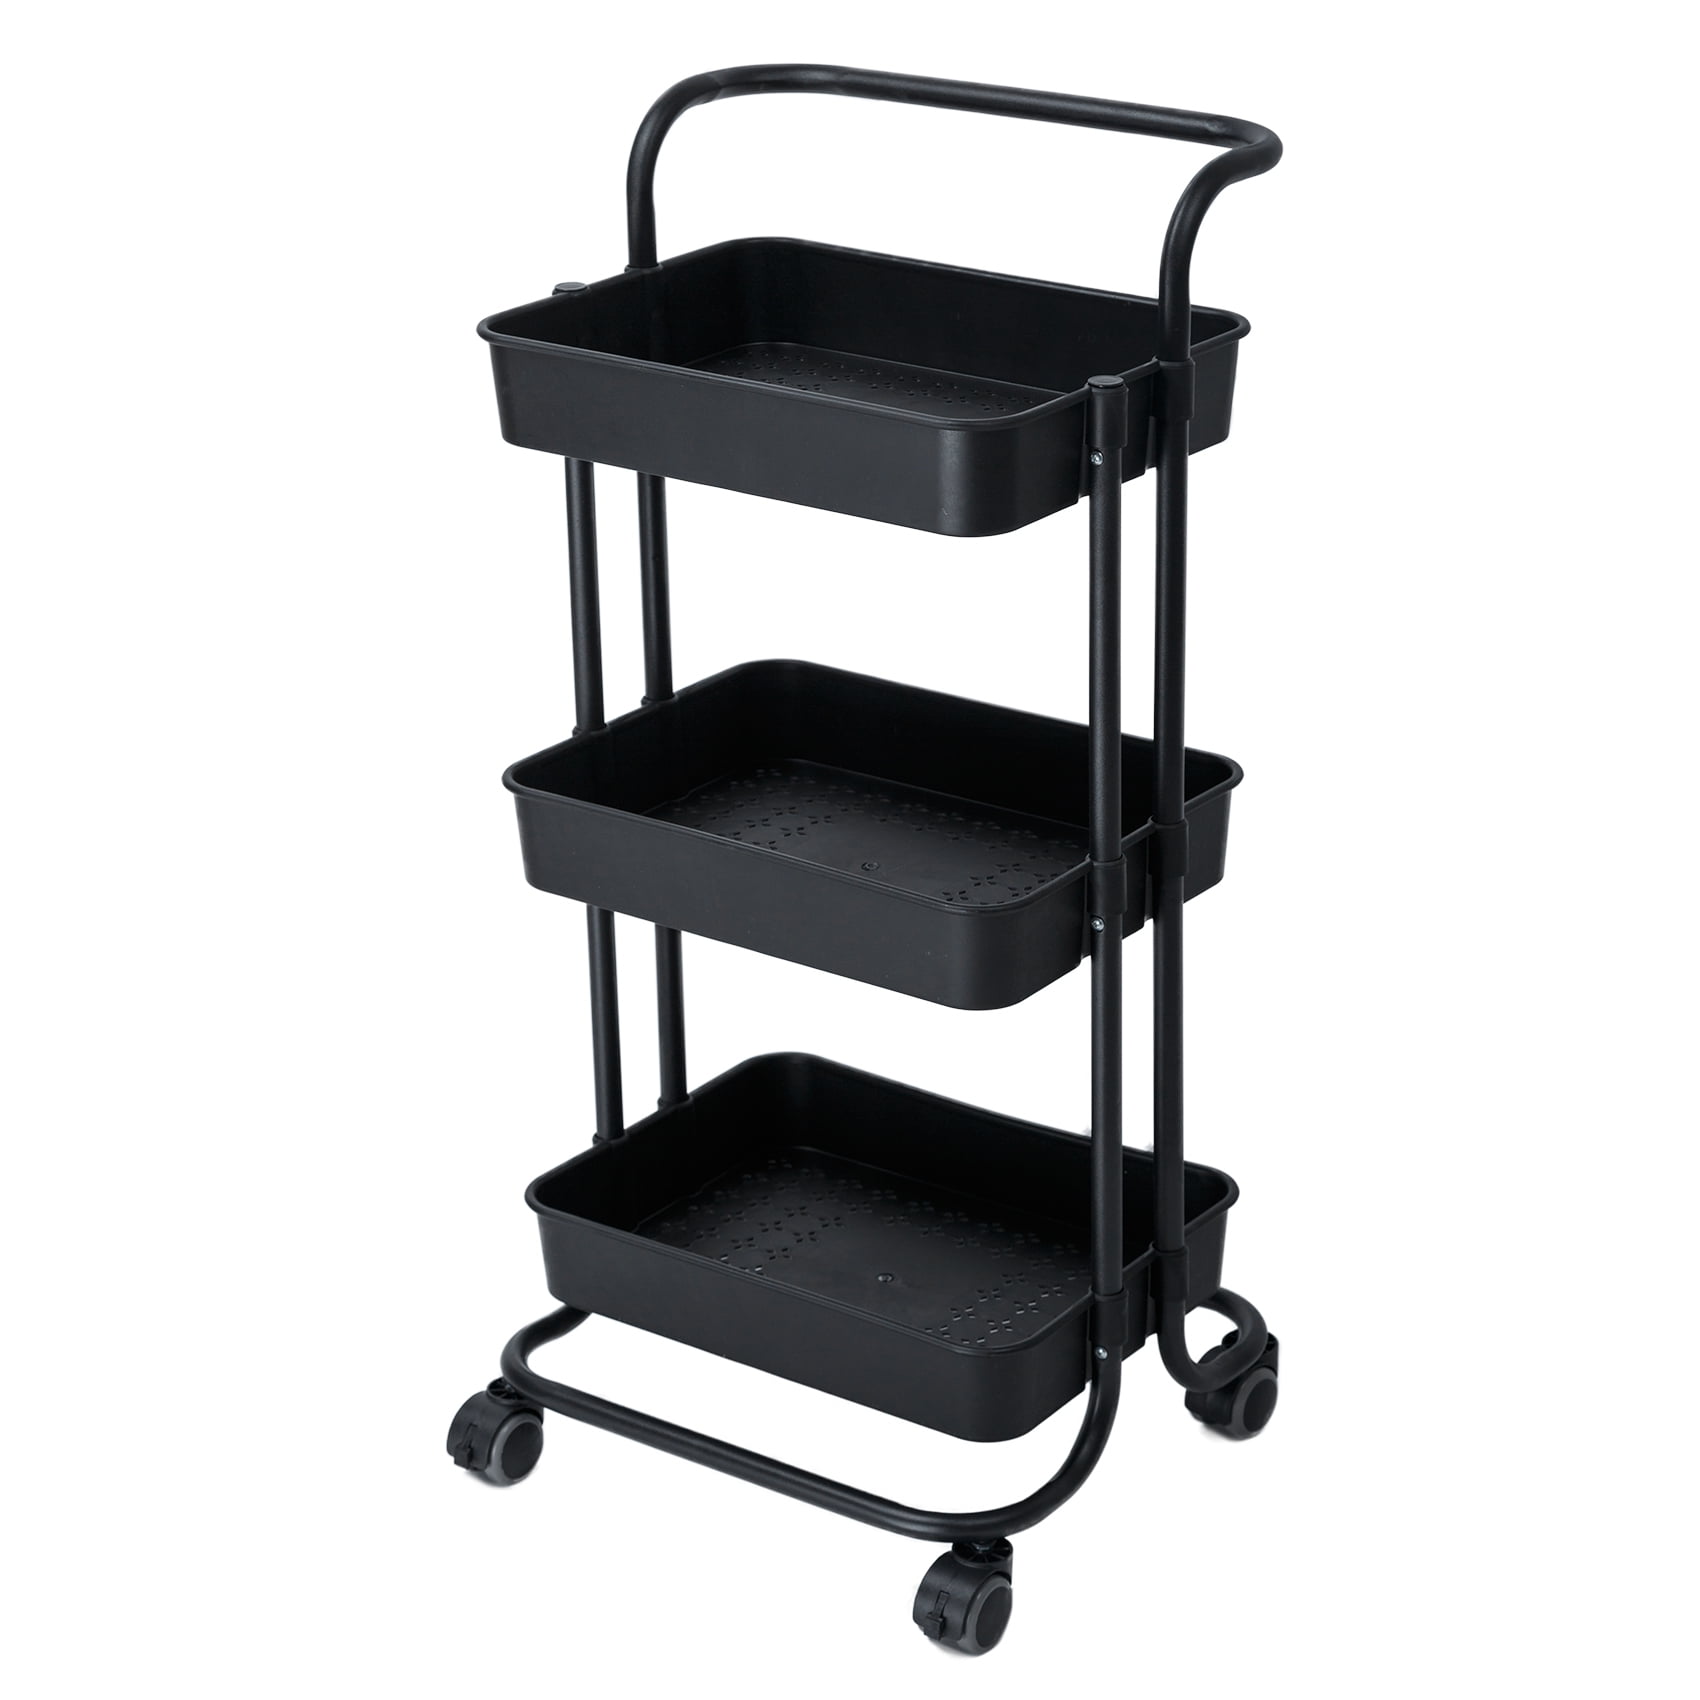 AROVA Rolling Cart Premium Utility Cart 3 Tier Rolling Cart with Wheels Rolling Storage Cart for Office/Home/Kitchen/Bathroom 